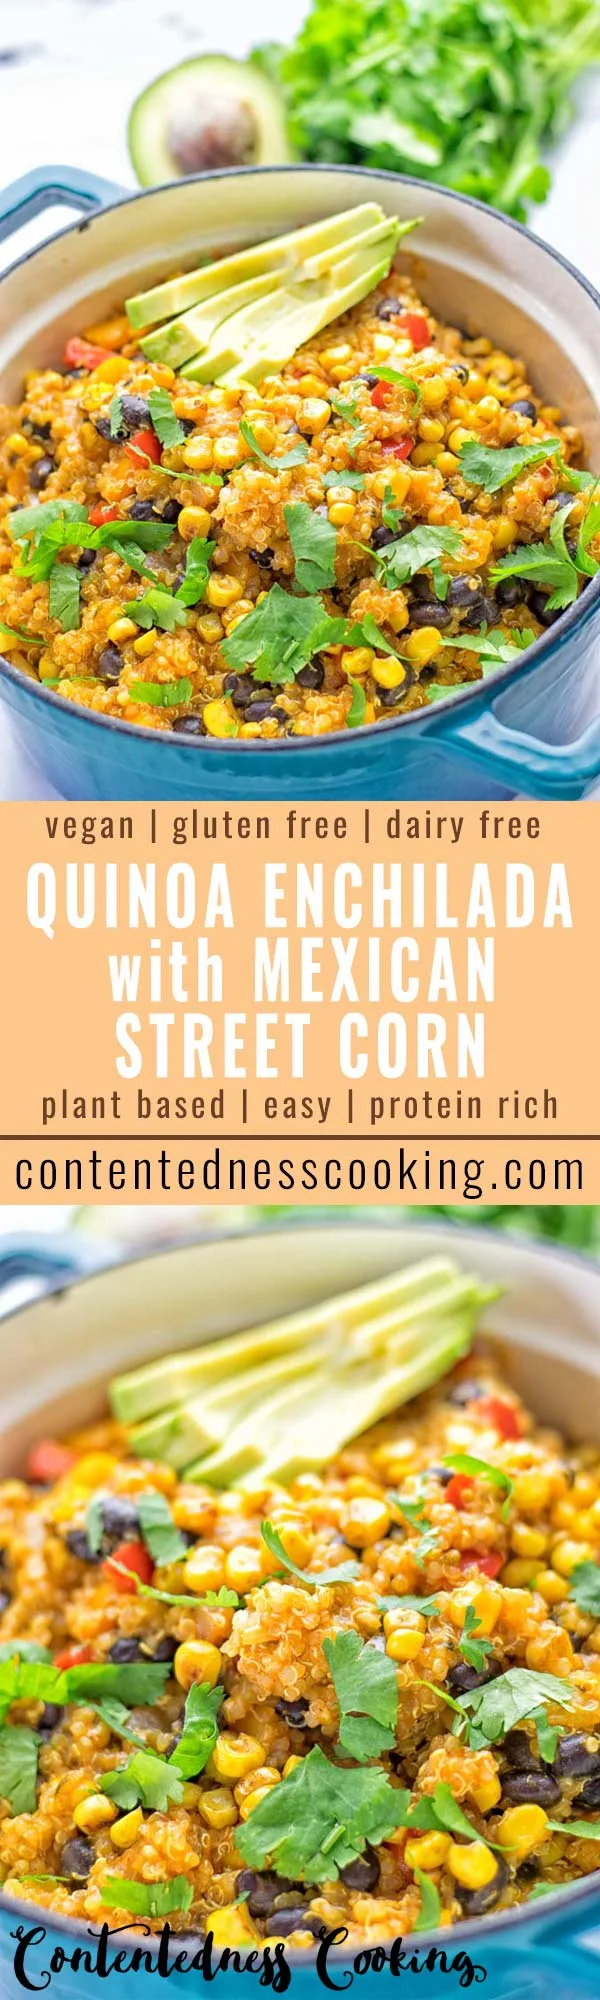 Quinoa Enchilada with Mexican Street Corn | #vegan #glutenfree #contentednesscooking #plantbased #dairyfree